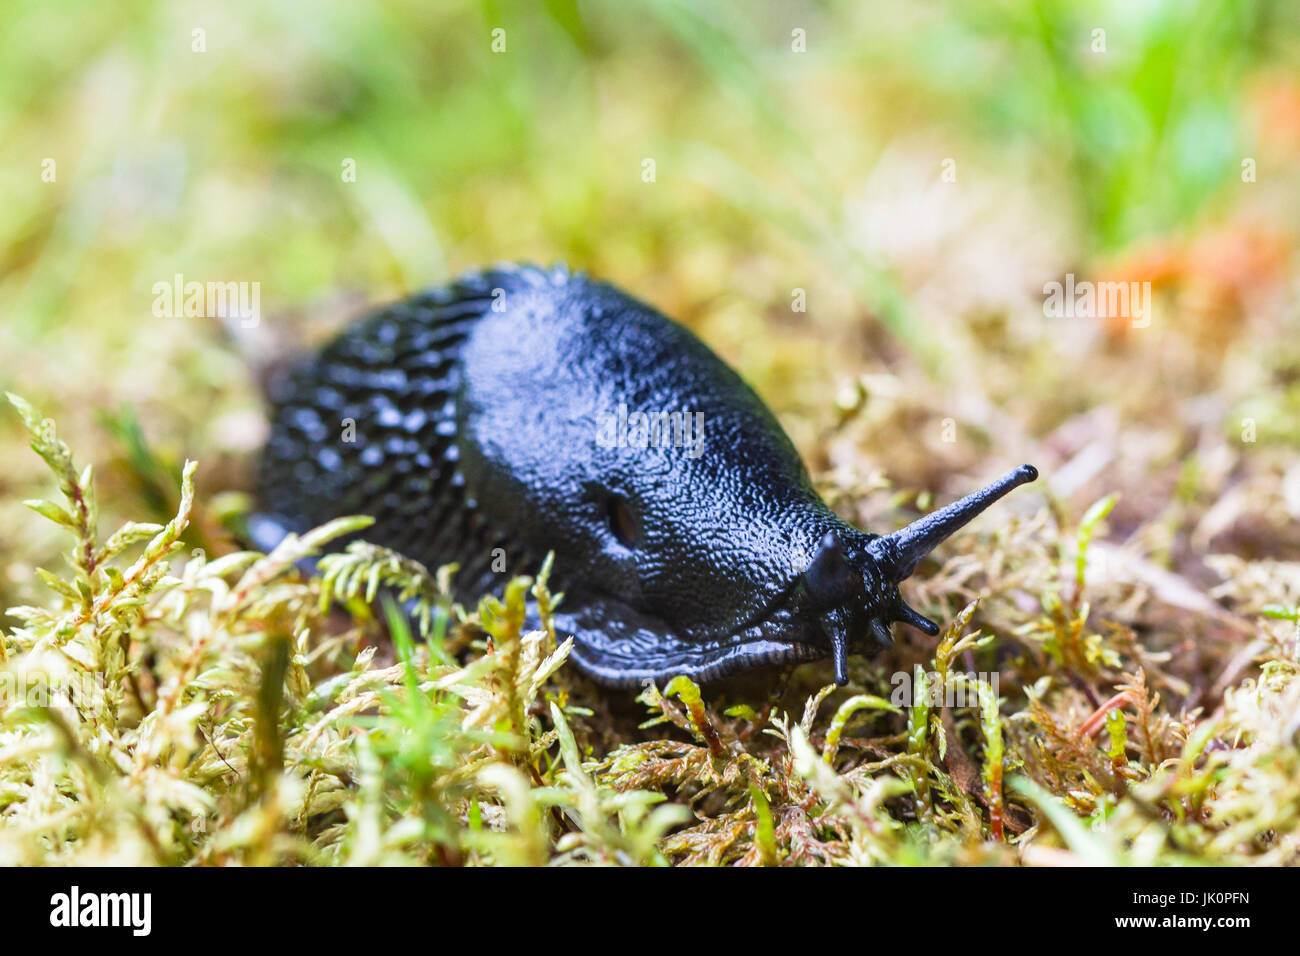 Arion vulgaris - Spanish slug Stock Photo